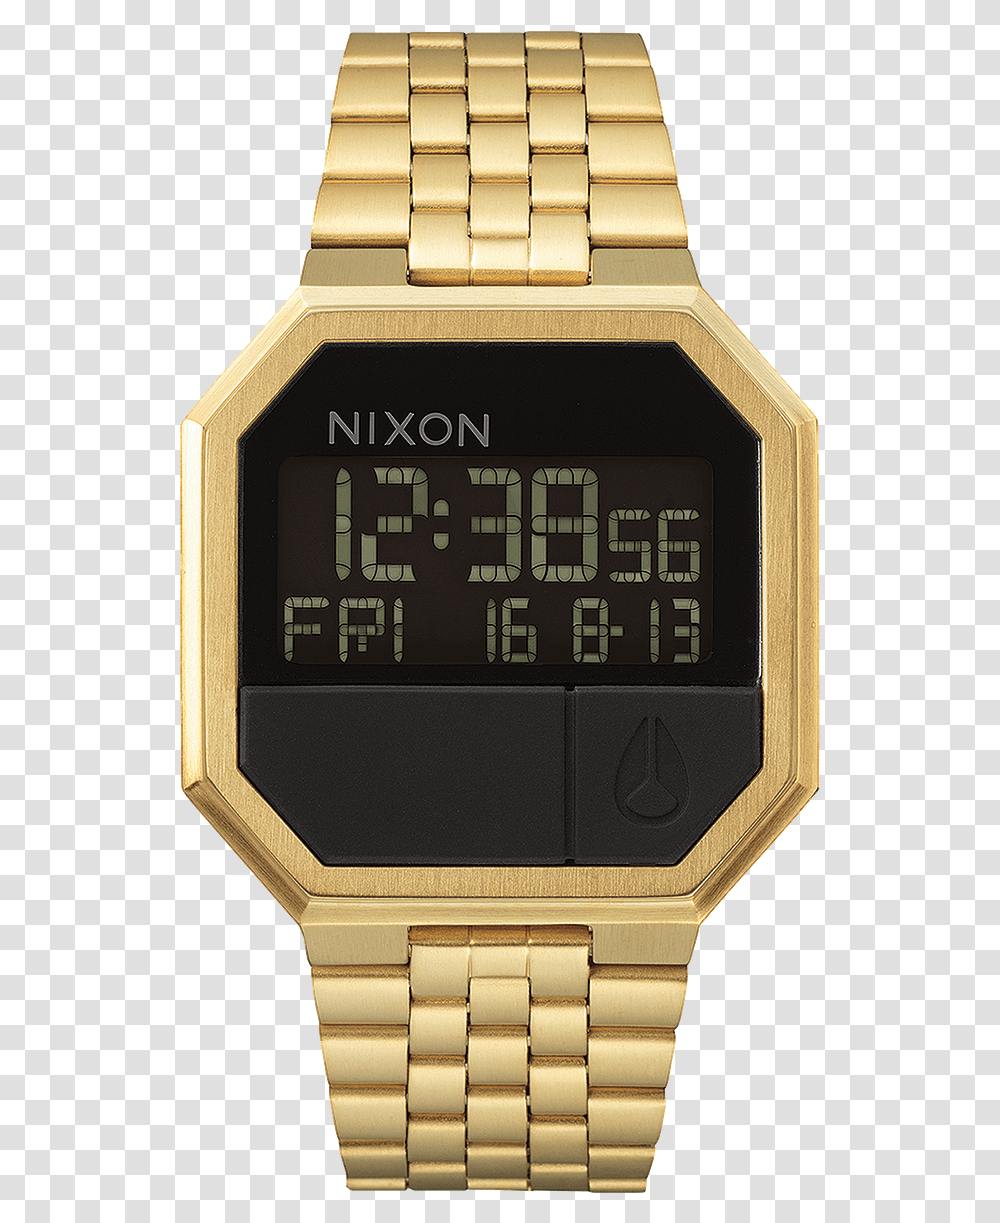 Gold Nixon Watch Price, Clock, Digital Clock, Digital Watch, Alarm Clock Transparent Png